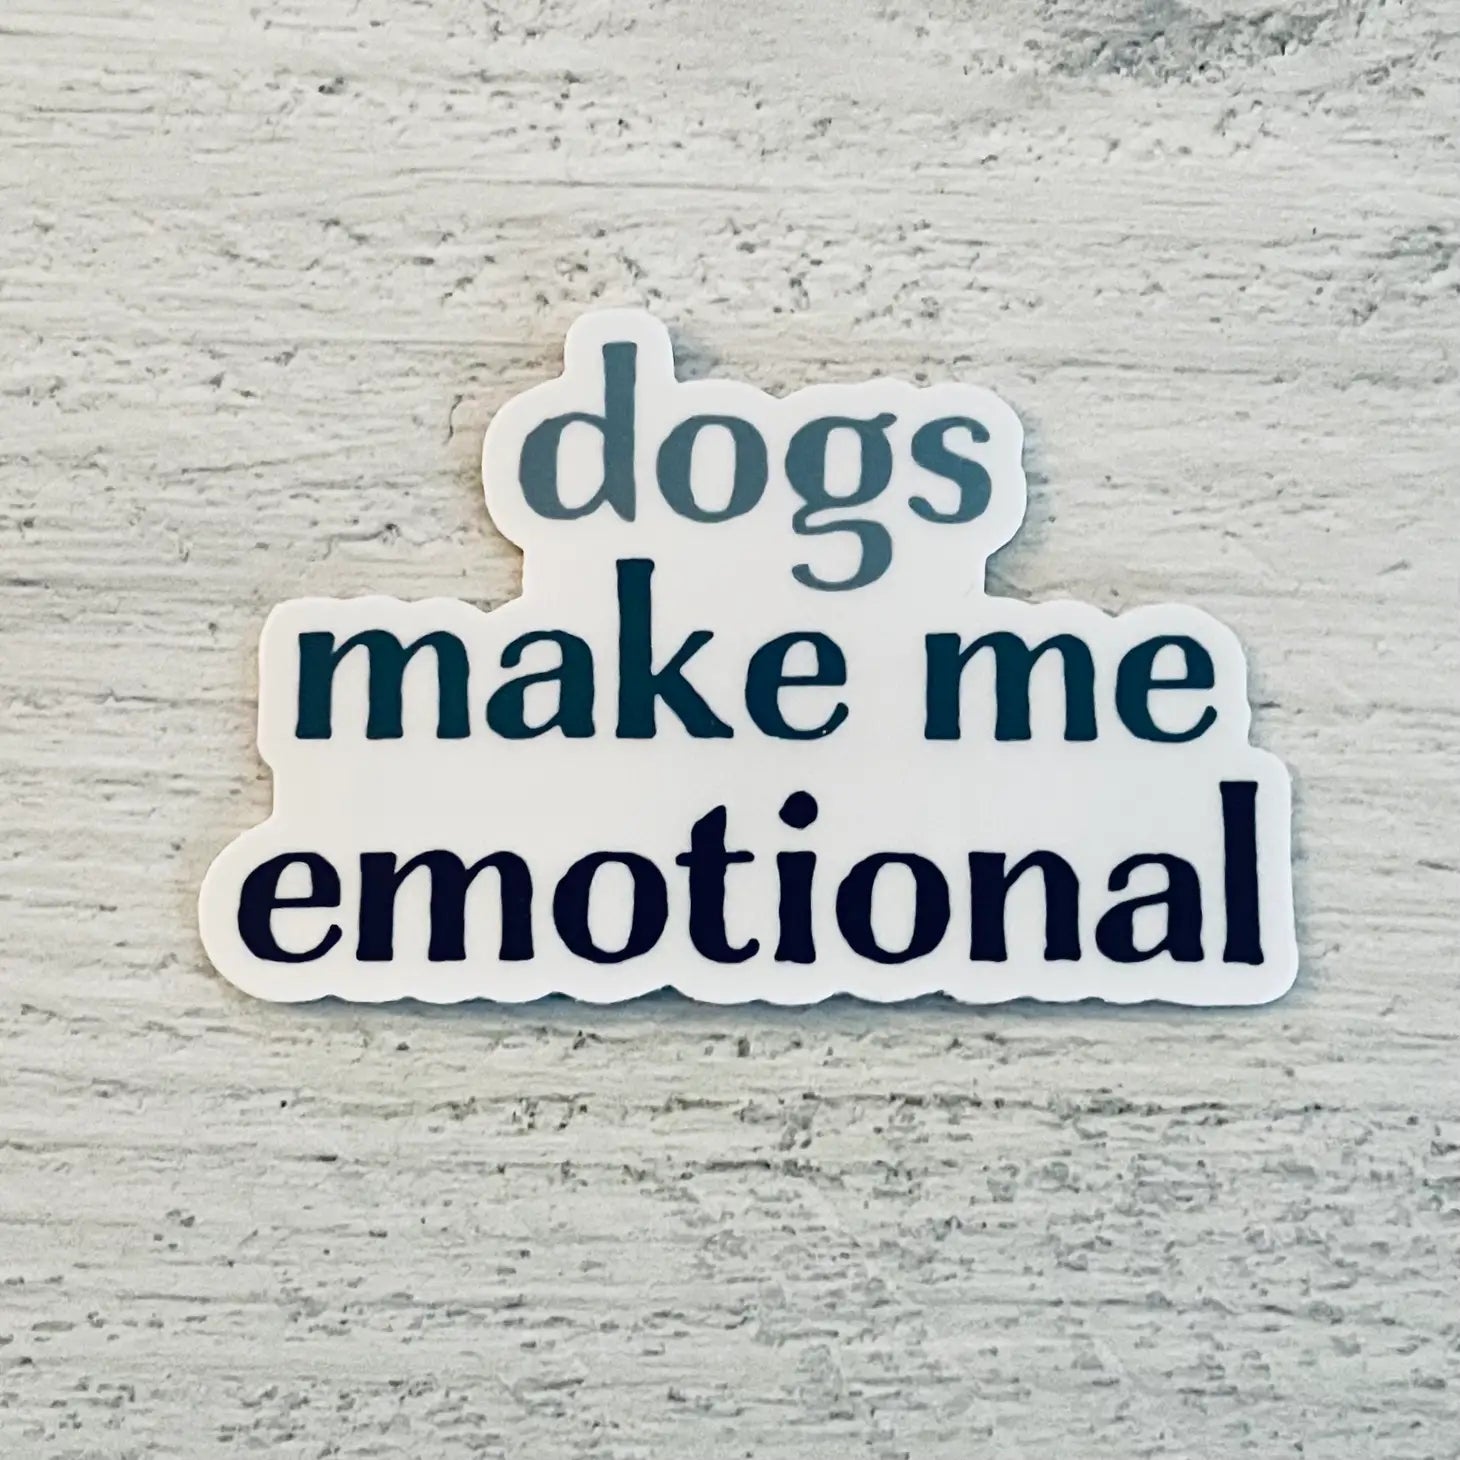 Dogs make me emotional Sticker animal lover